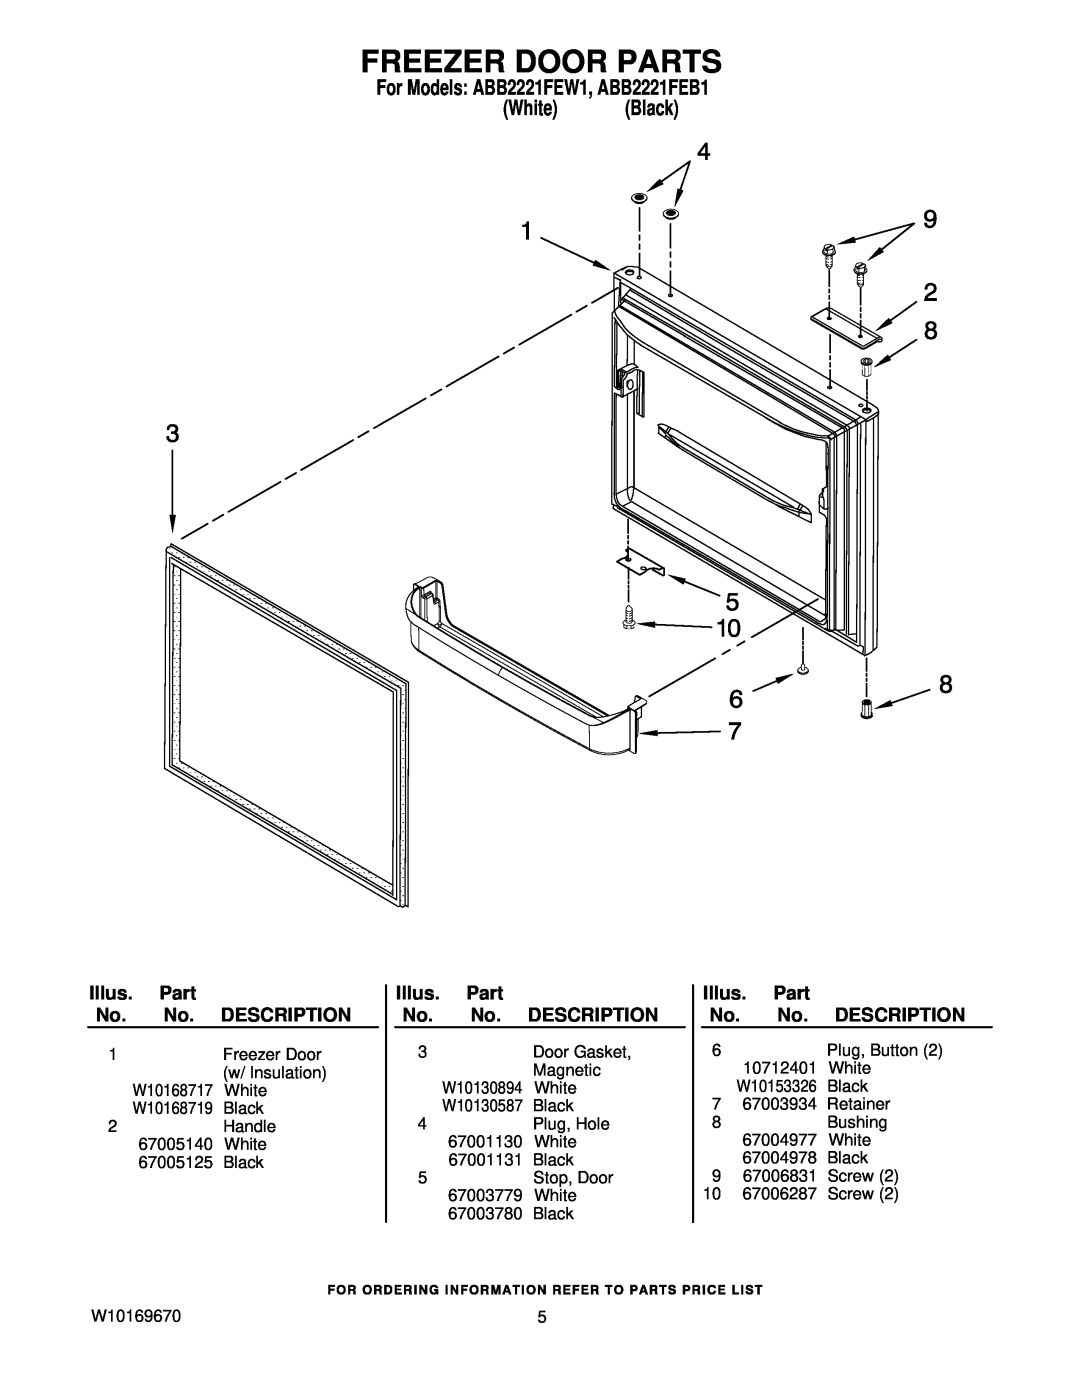 Amana manual Freezer Door Parts, Illus, Description, For Models ABB2221FEW1, ABB2221FEB1 White Black 